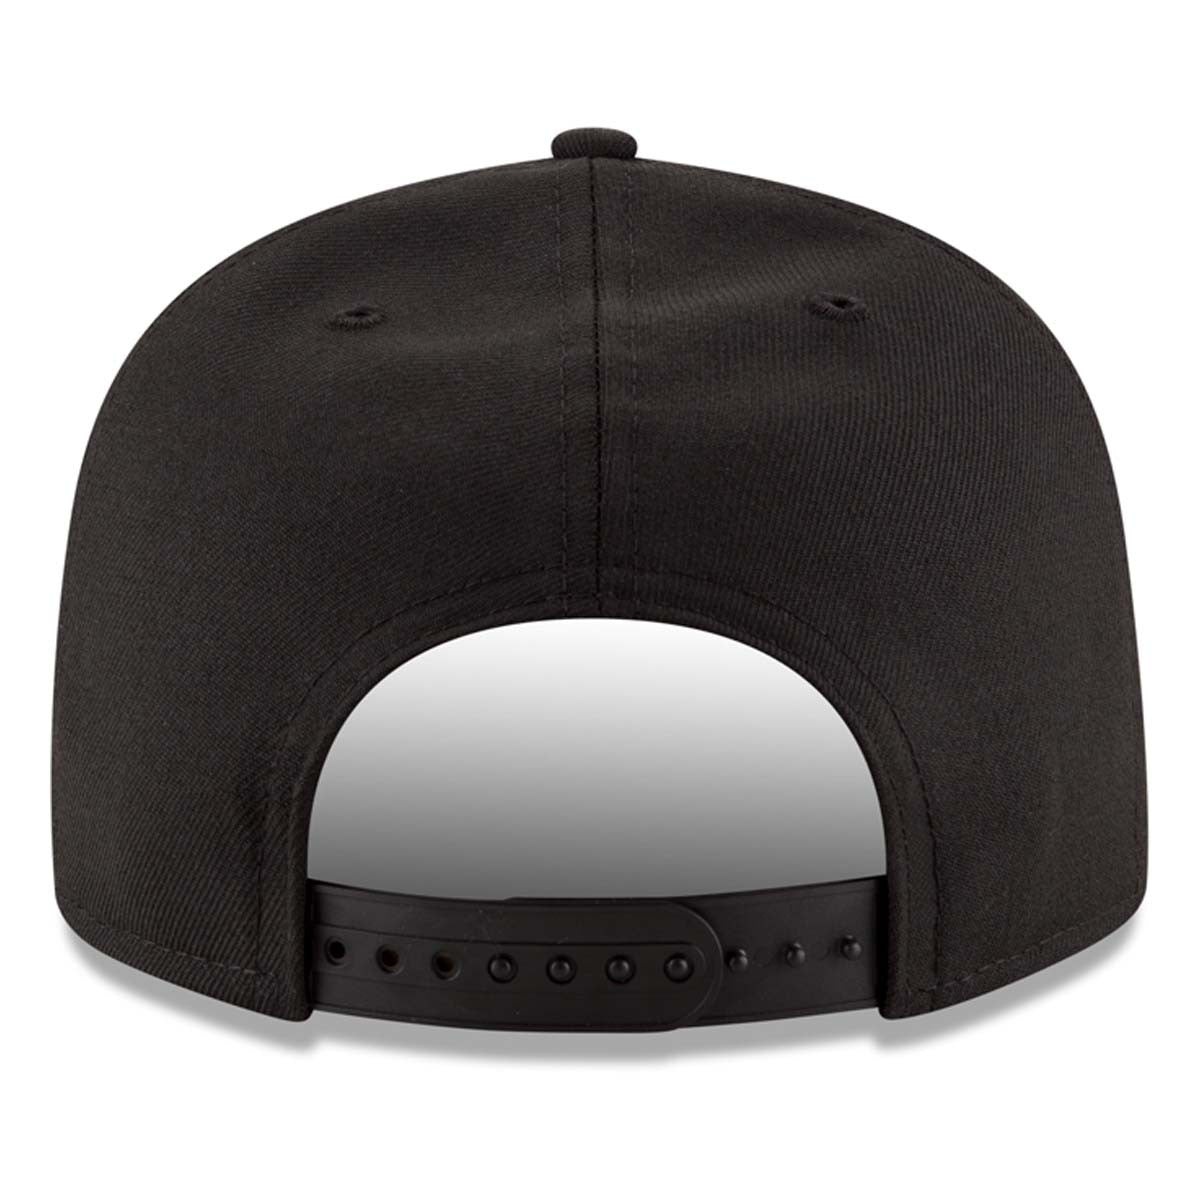 New Era - New Era Kansas City Chiefs 950 Snapback Hat Flexfit Hat